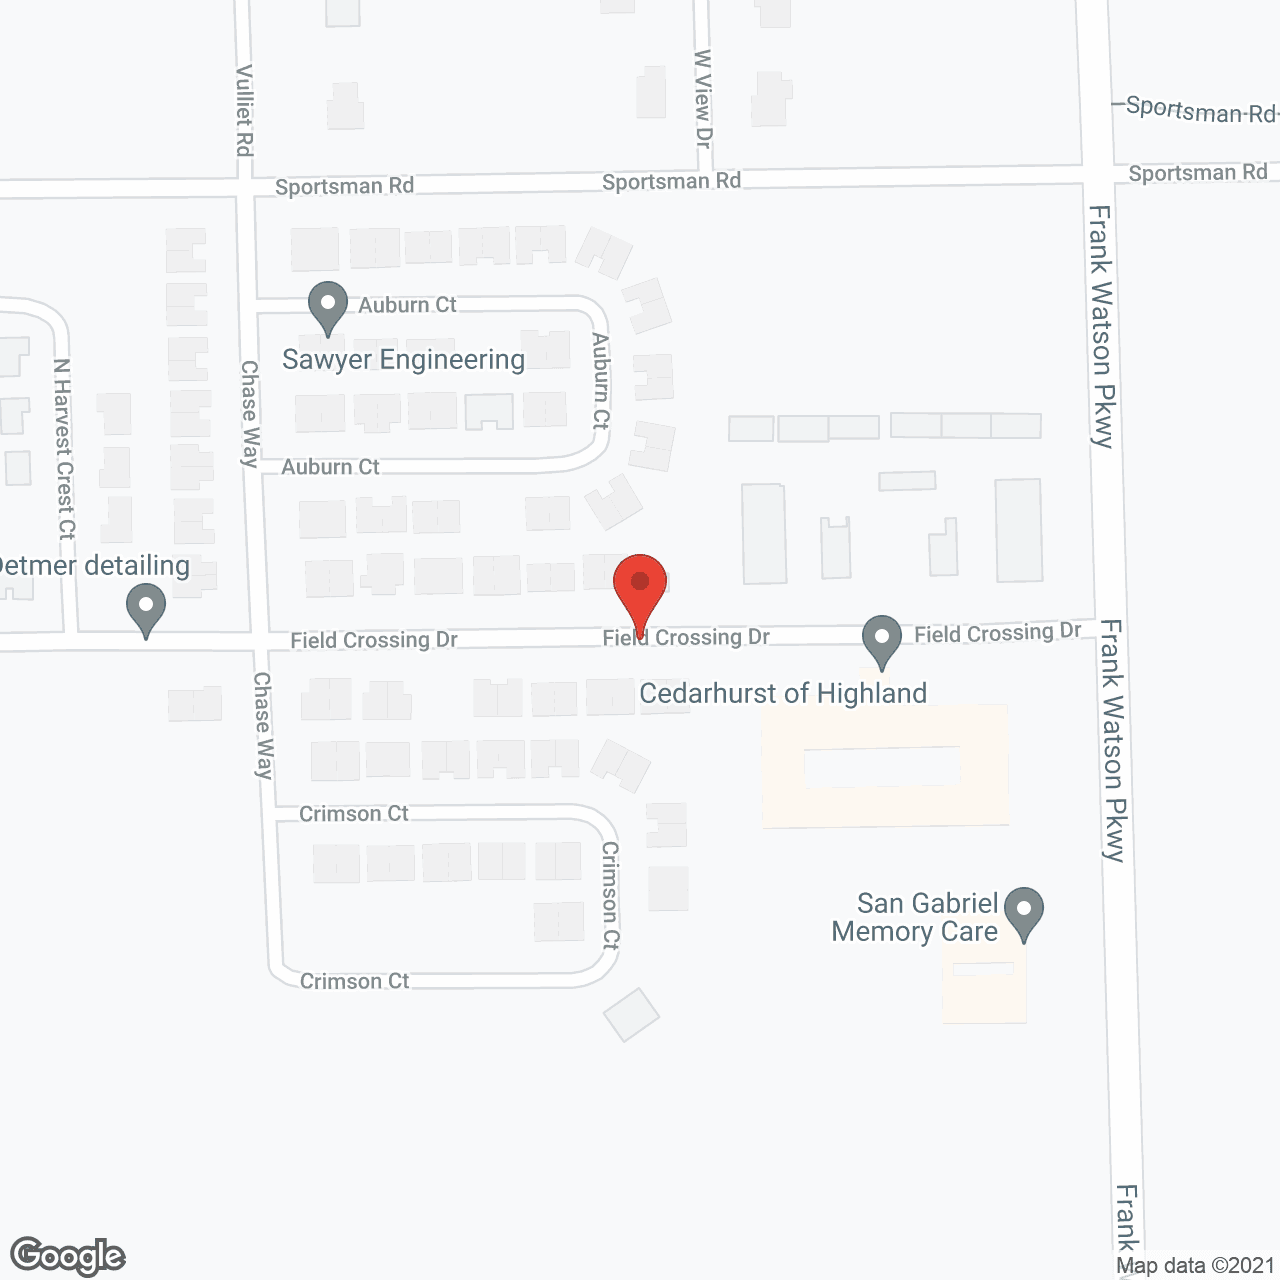 Cedarhurst of Highland in google map